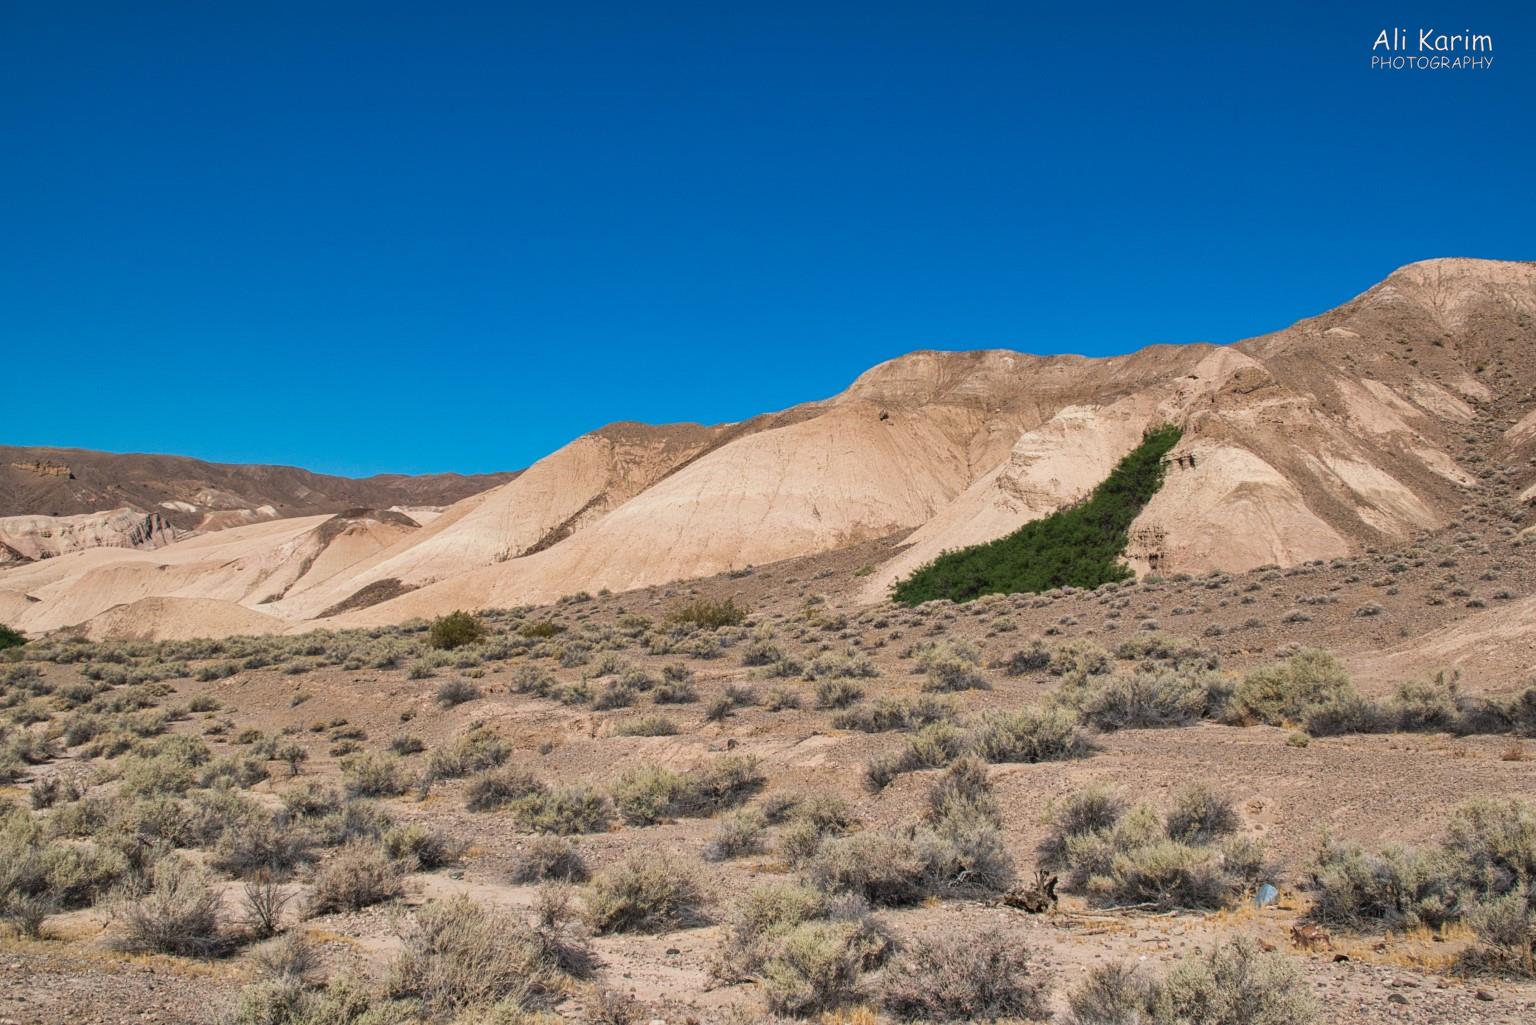 Death Valley National Park, June 2020, Interesting desert landscape during our hike; thanks to natural springs